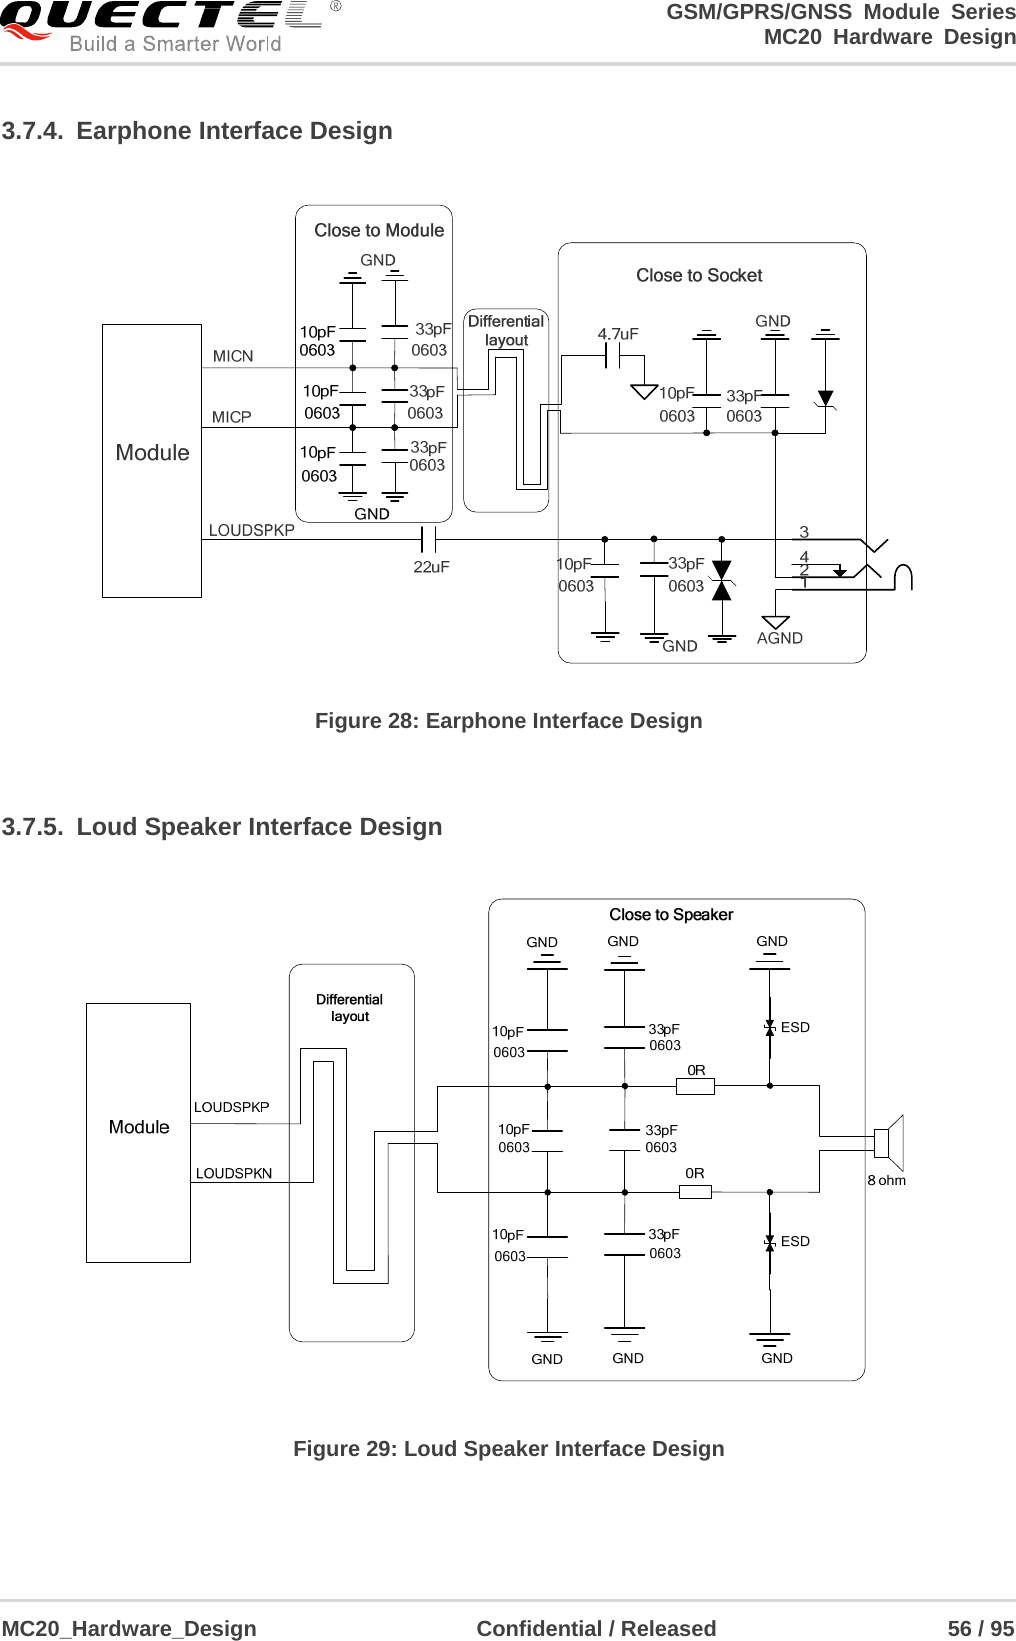                                                                     GSM/GPRS/GNSS Module Series                                                                 MC20 Hardware Design  MC20_Hardware_Design                    Confidential / Released                     56 / 95     3.7.4. Earphone Interface Design  Figure 28: Earphone Interface Design  3.7.5.  Loud Speaker Interface Design  Figure 29: Loud Speaker Interface Design  